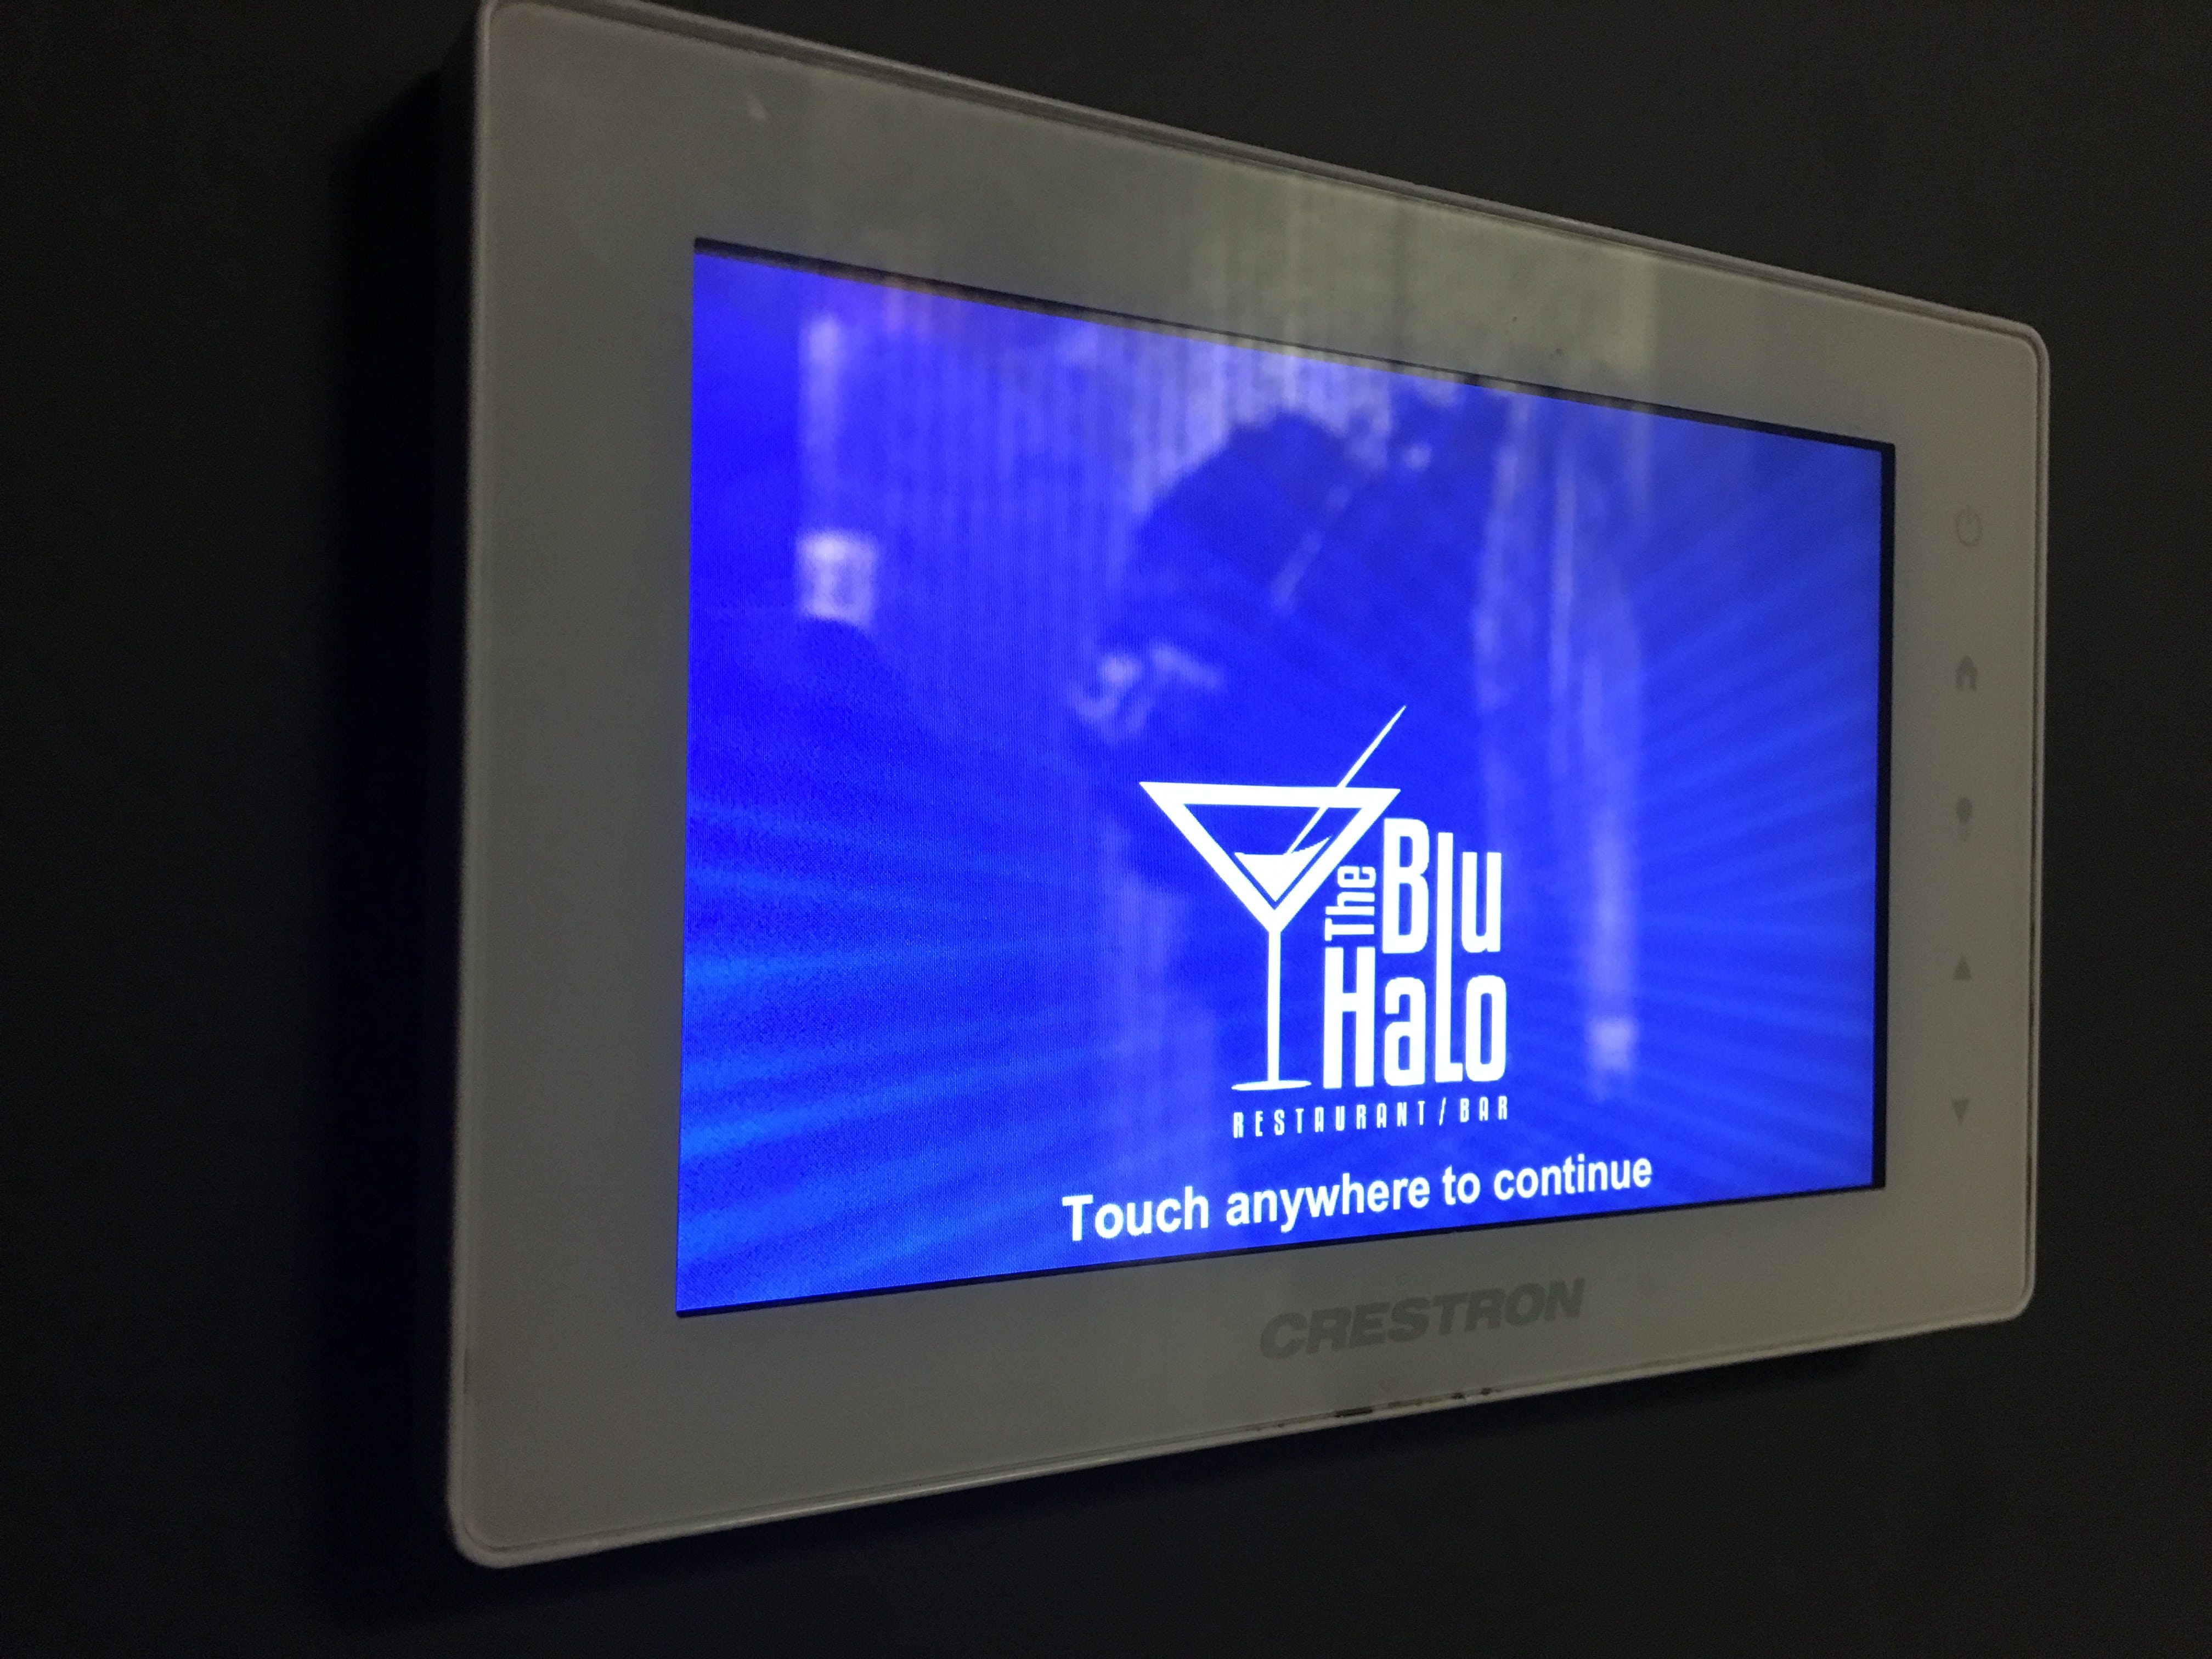 The Blu Halo – Tallahassee